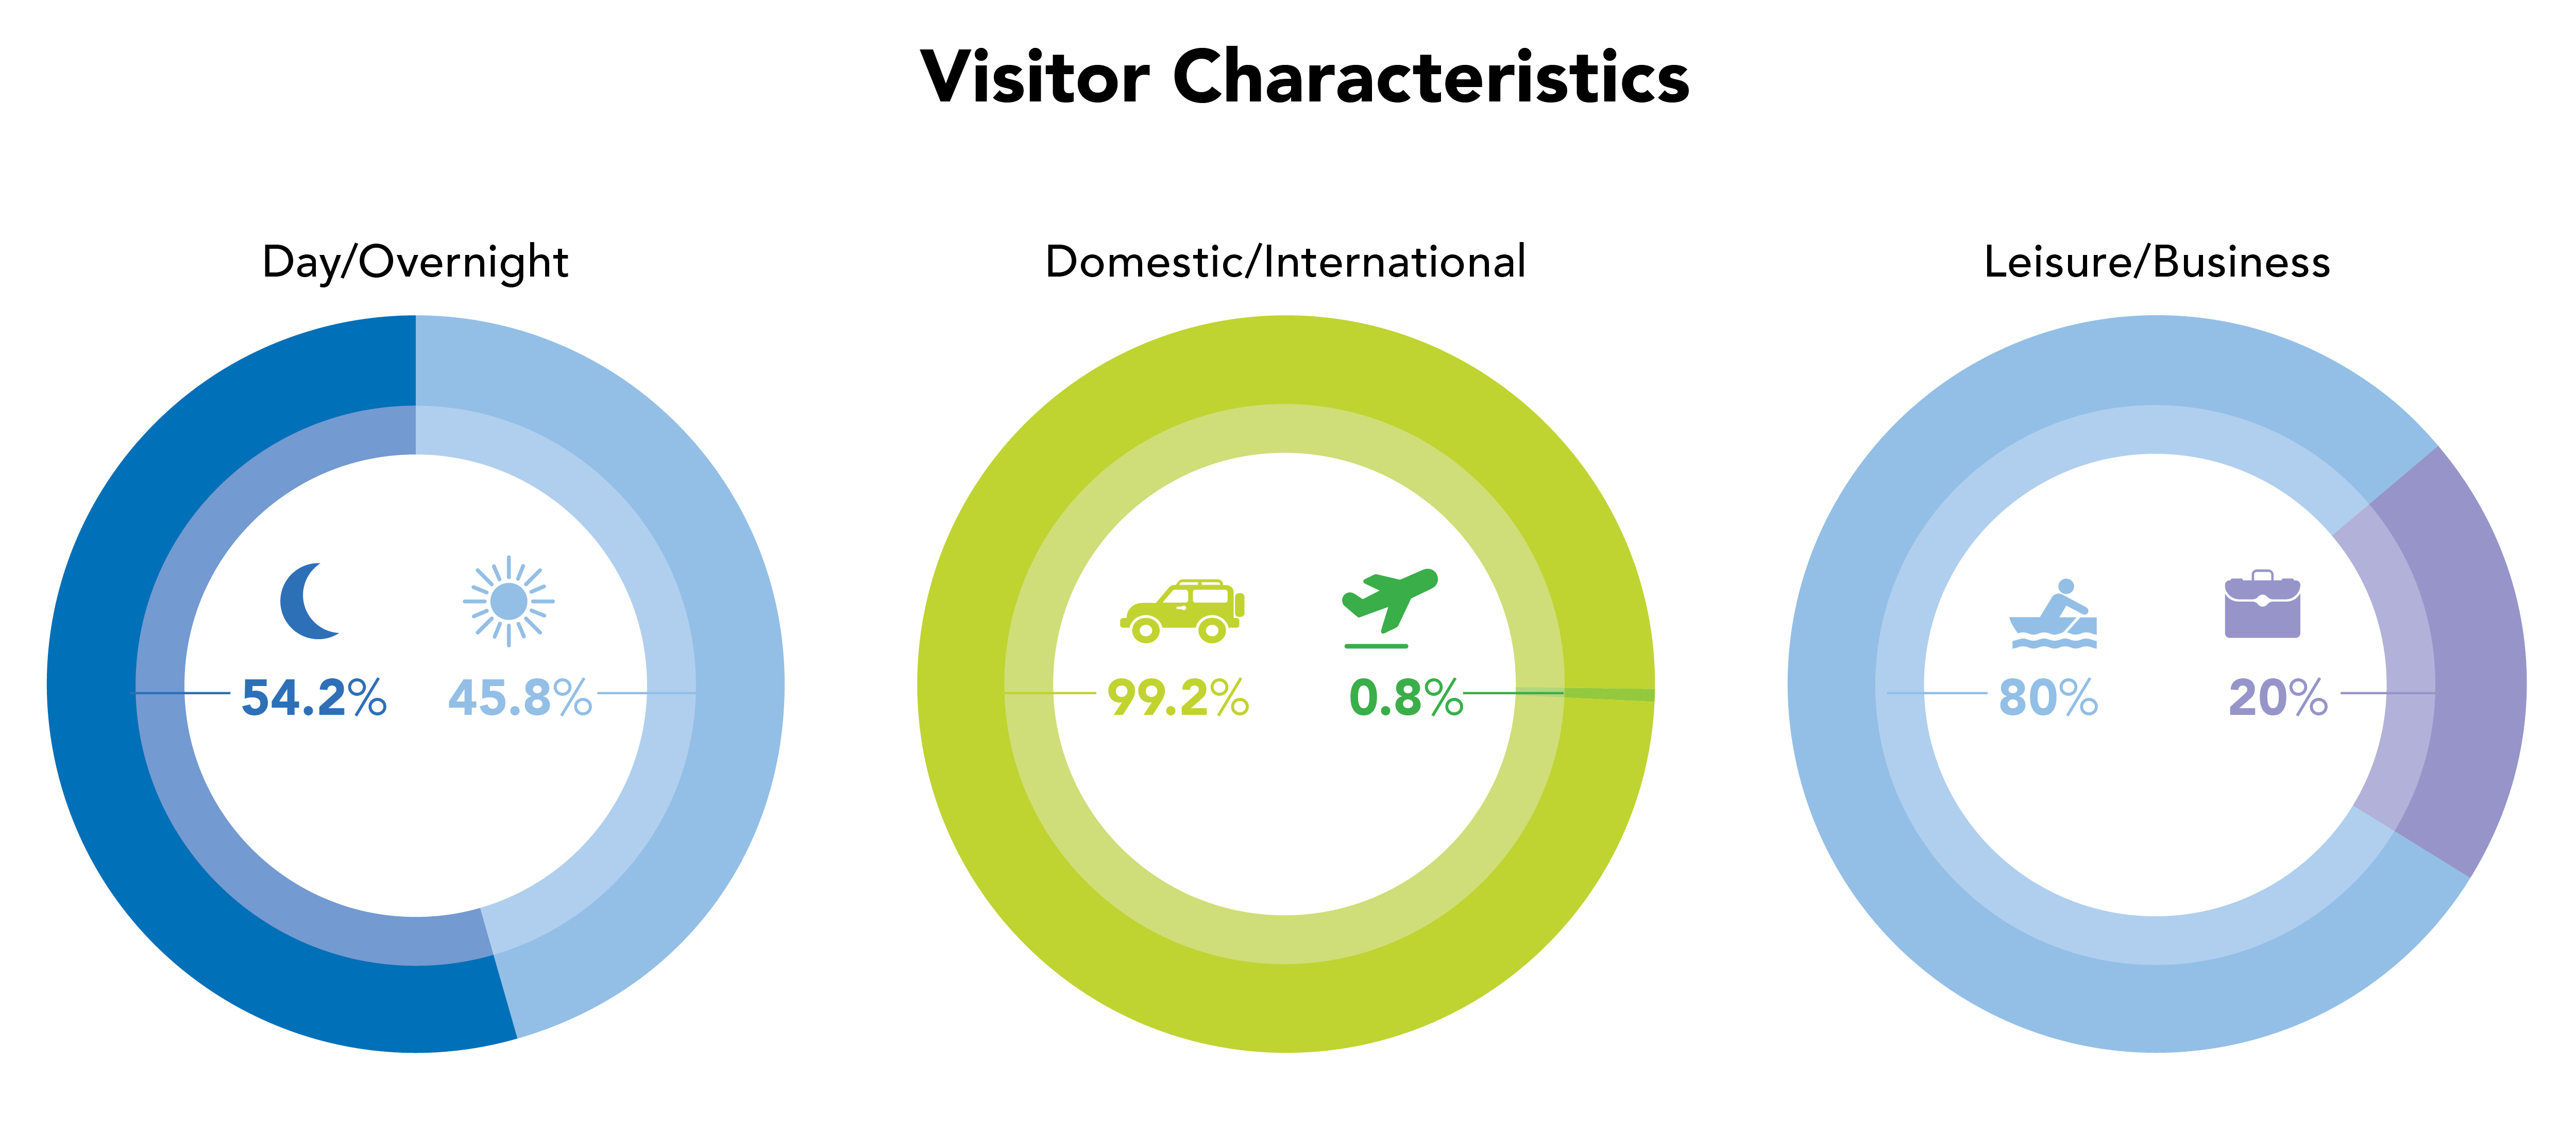 Visitor Characteristics